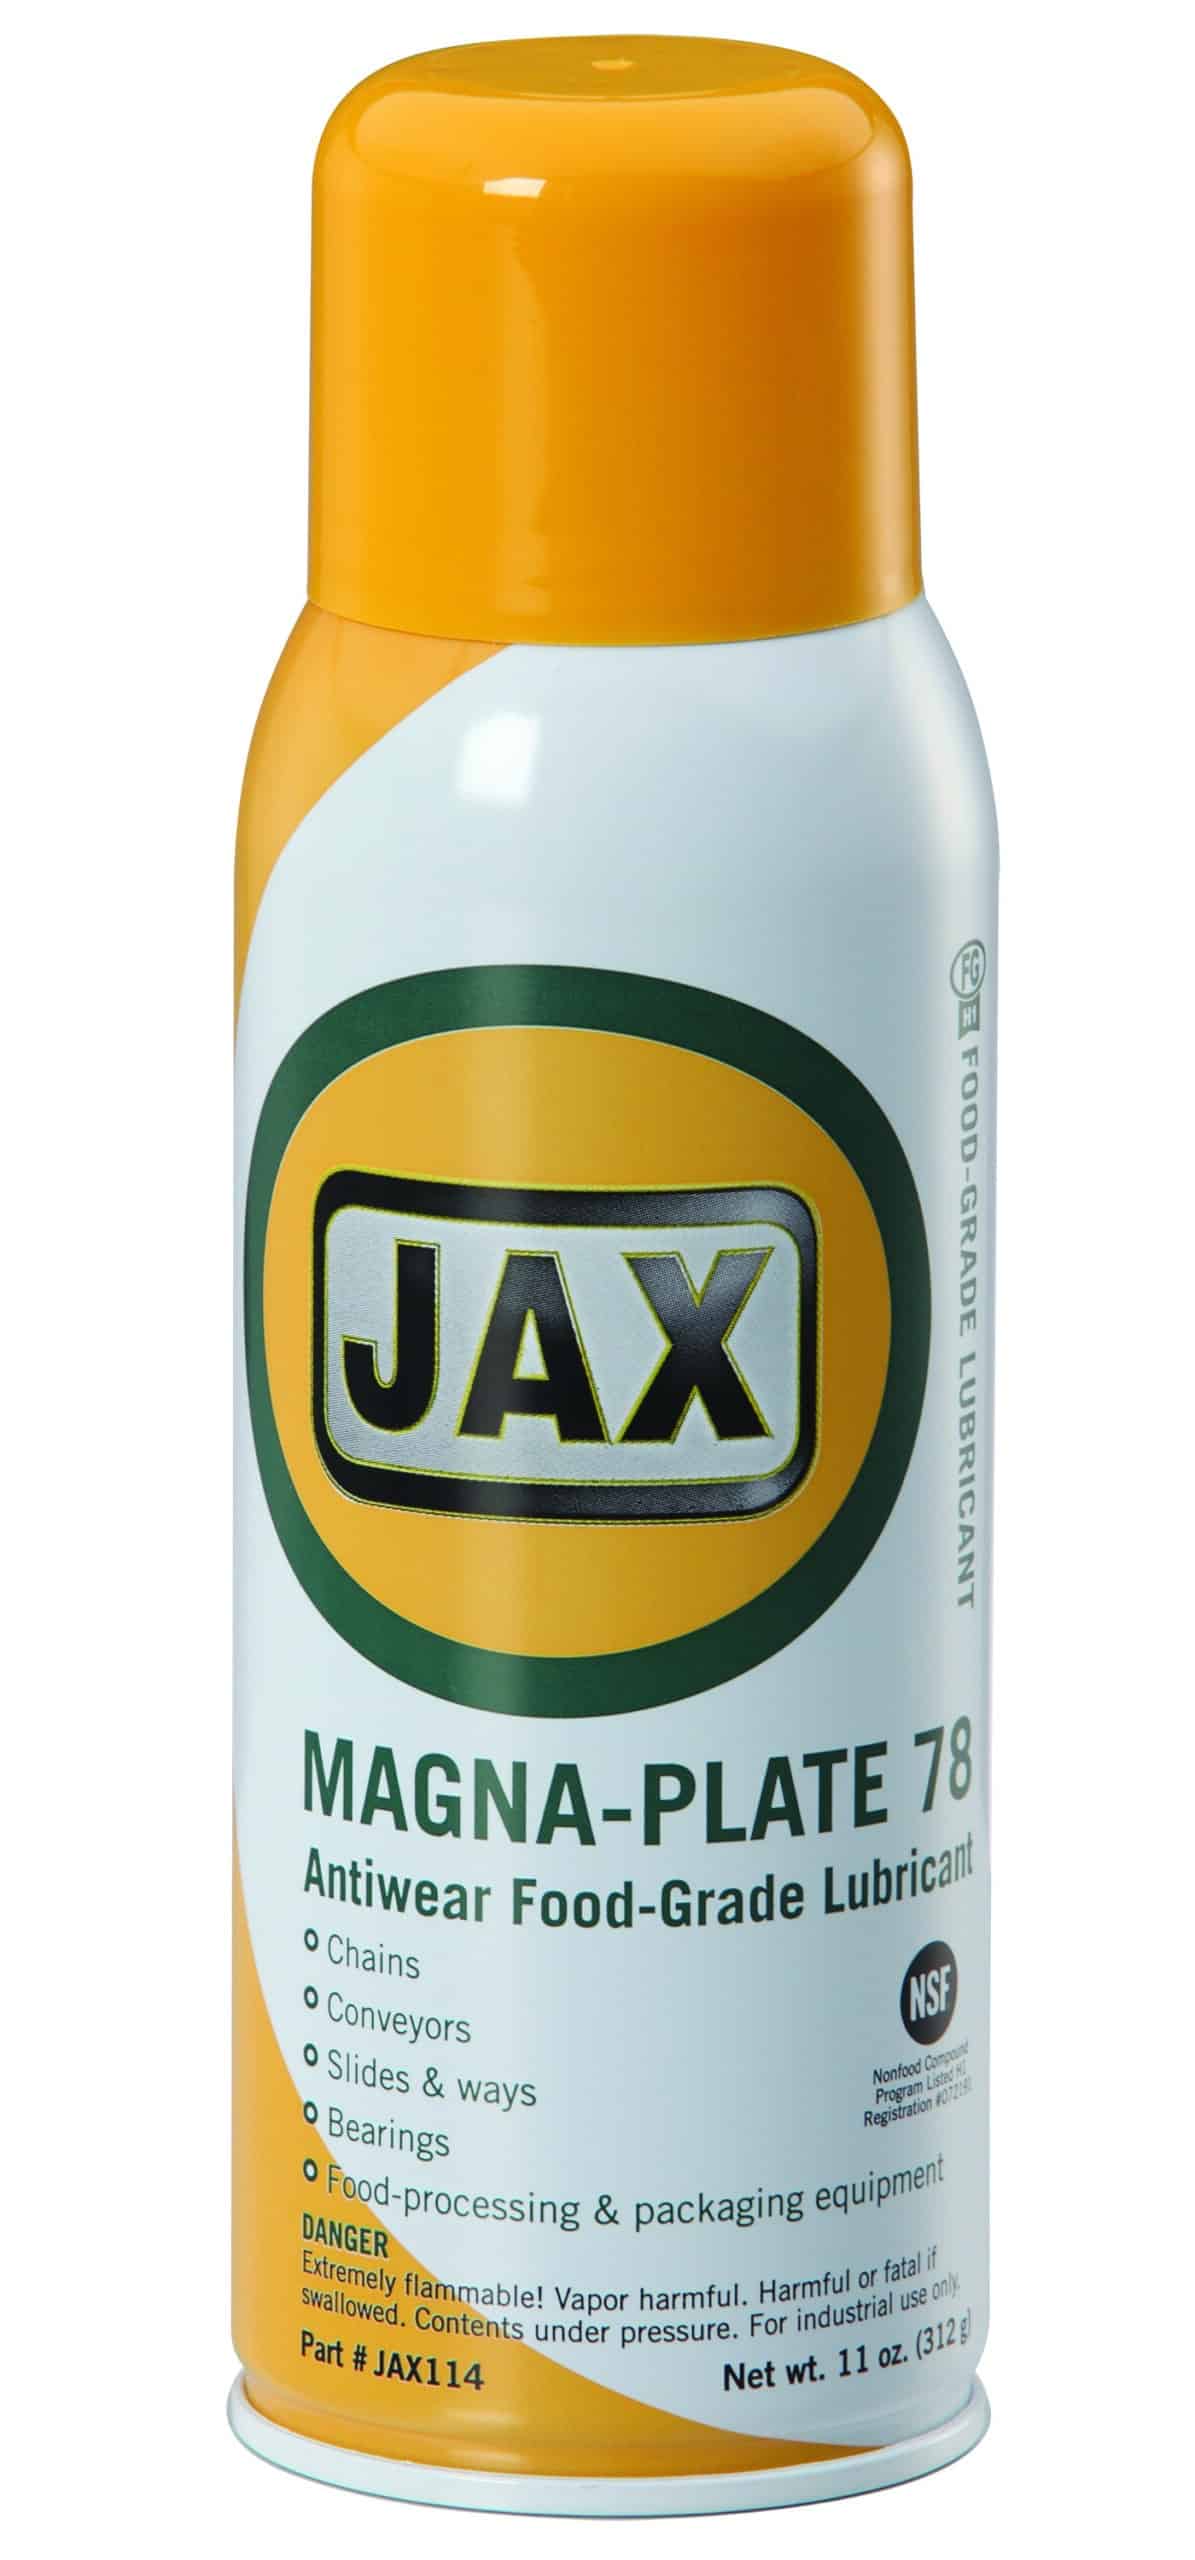 Jax magna plate lubricant spray